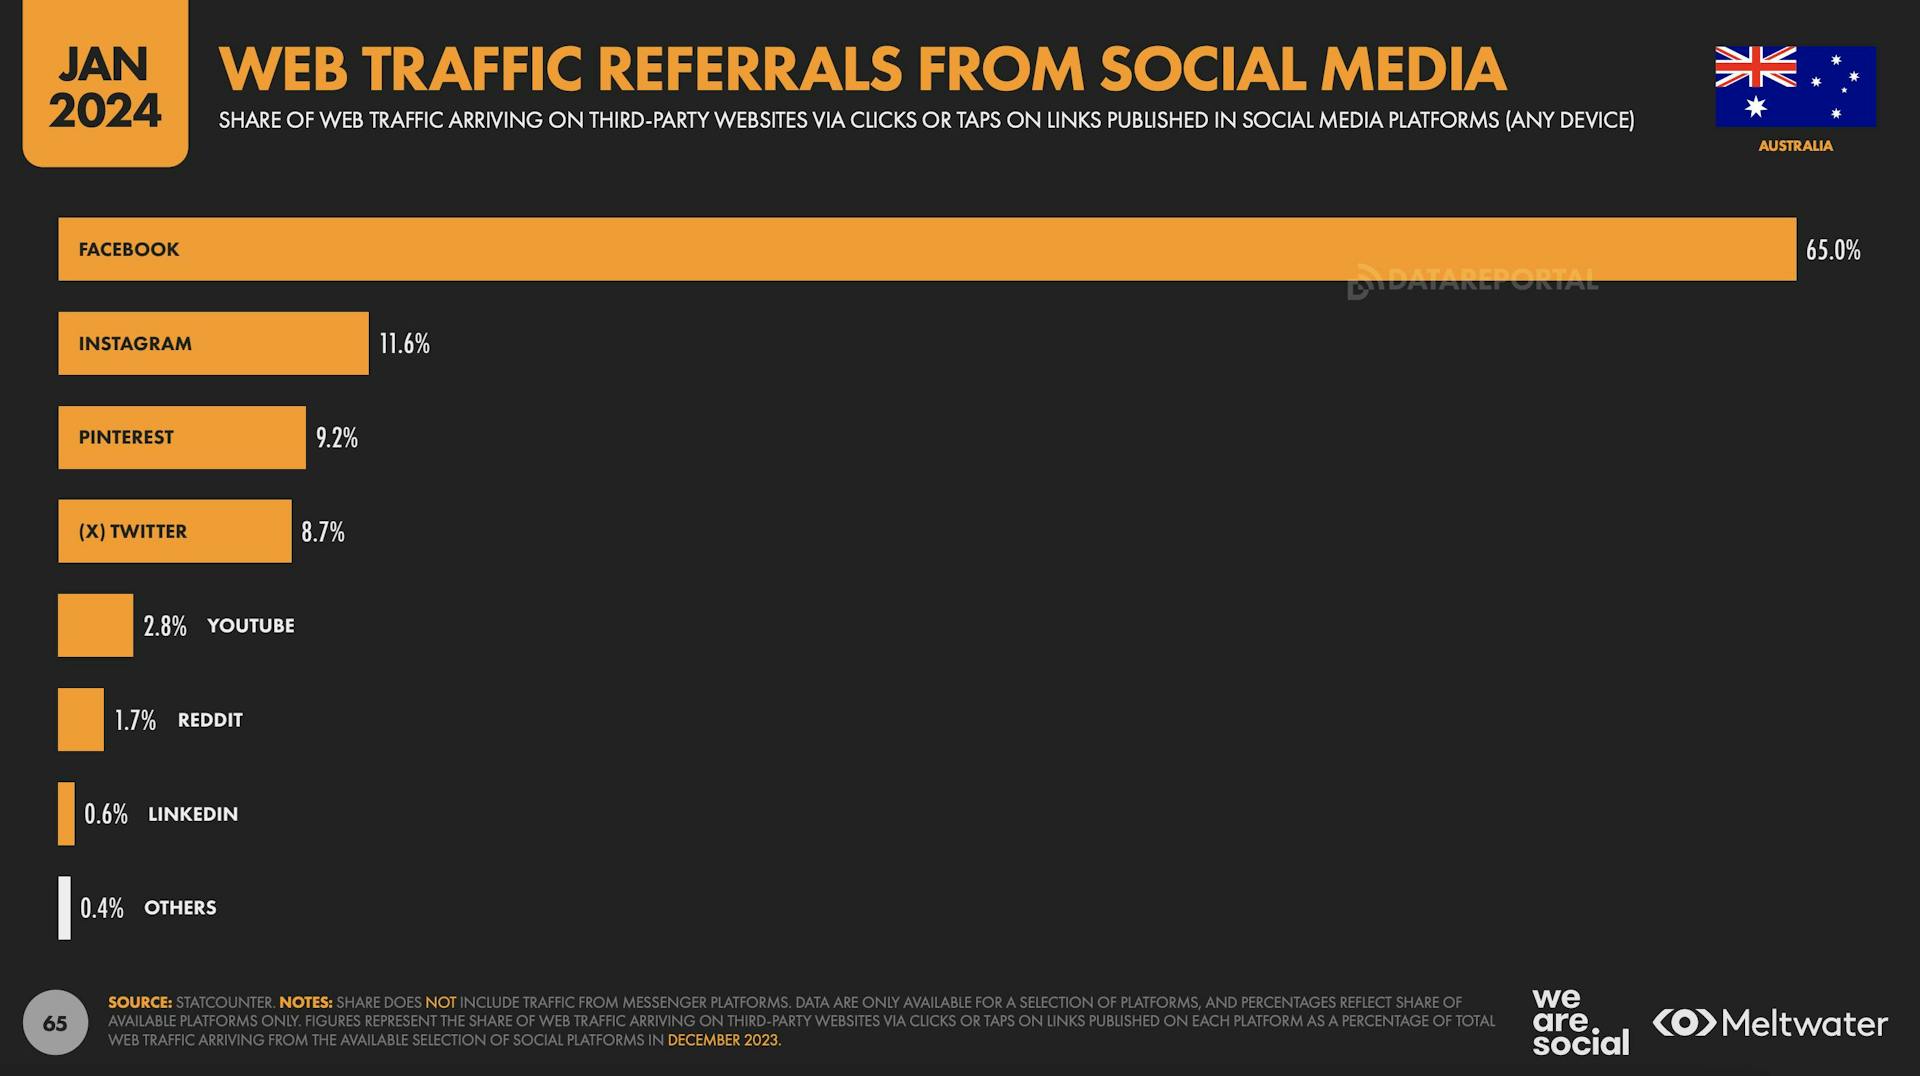 Web traffic referrals from social media based on Global Digital Report 2024 for Australia